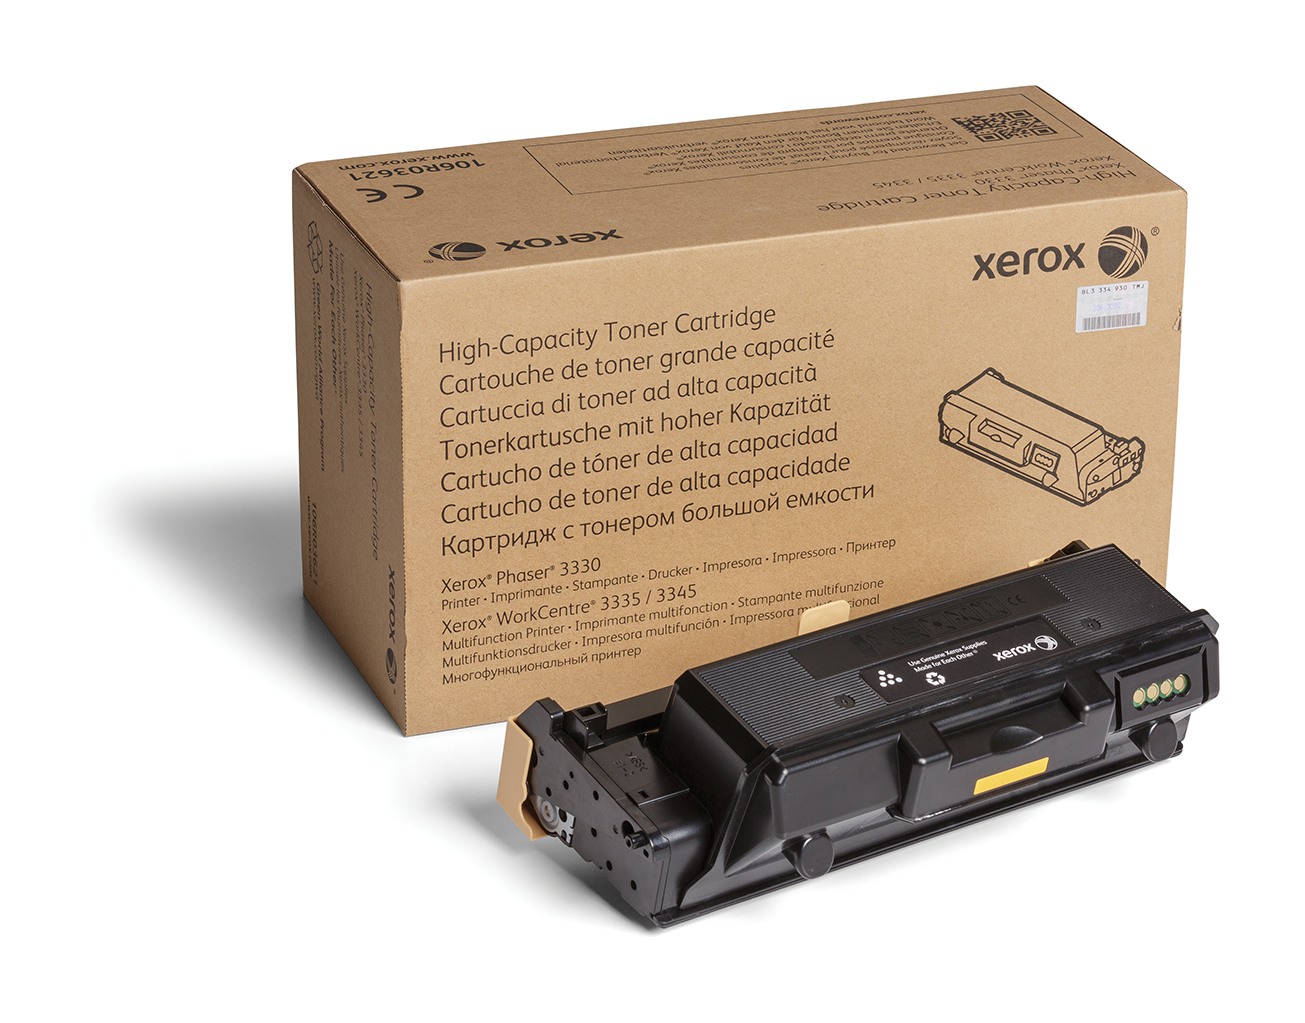 High-capacity toner cartridge (8.5K) 106R03621 Genuine Xerox Supplies